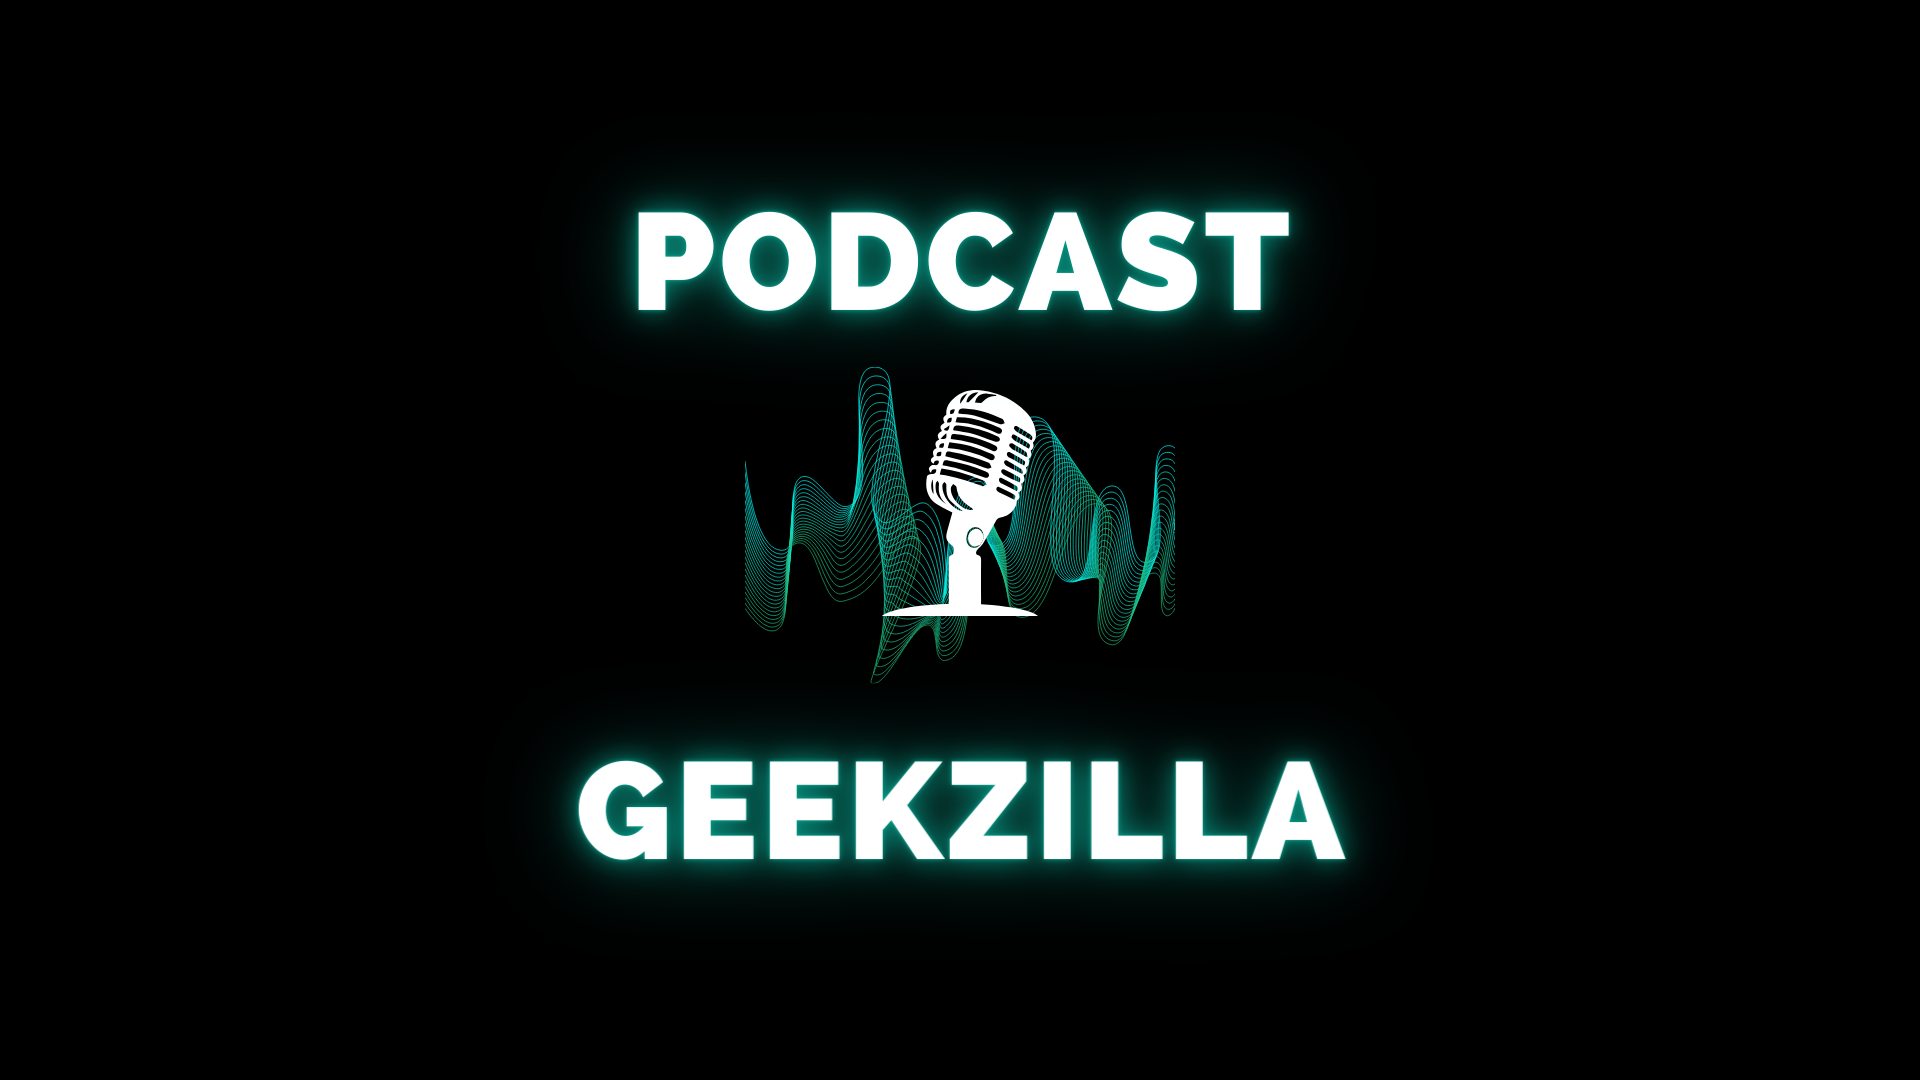 Geekzilla Podcast: Define Geekzilla Podcast and the Platform of Technology